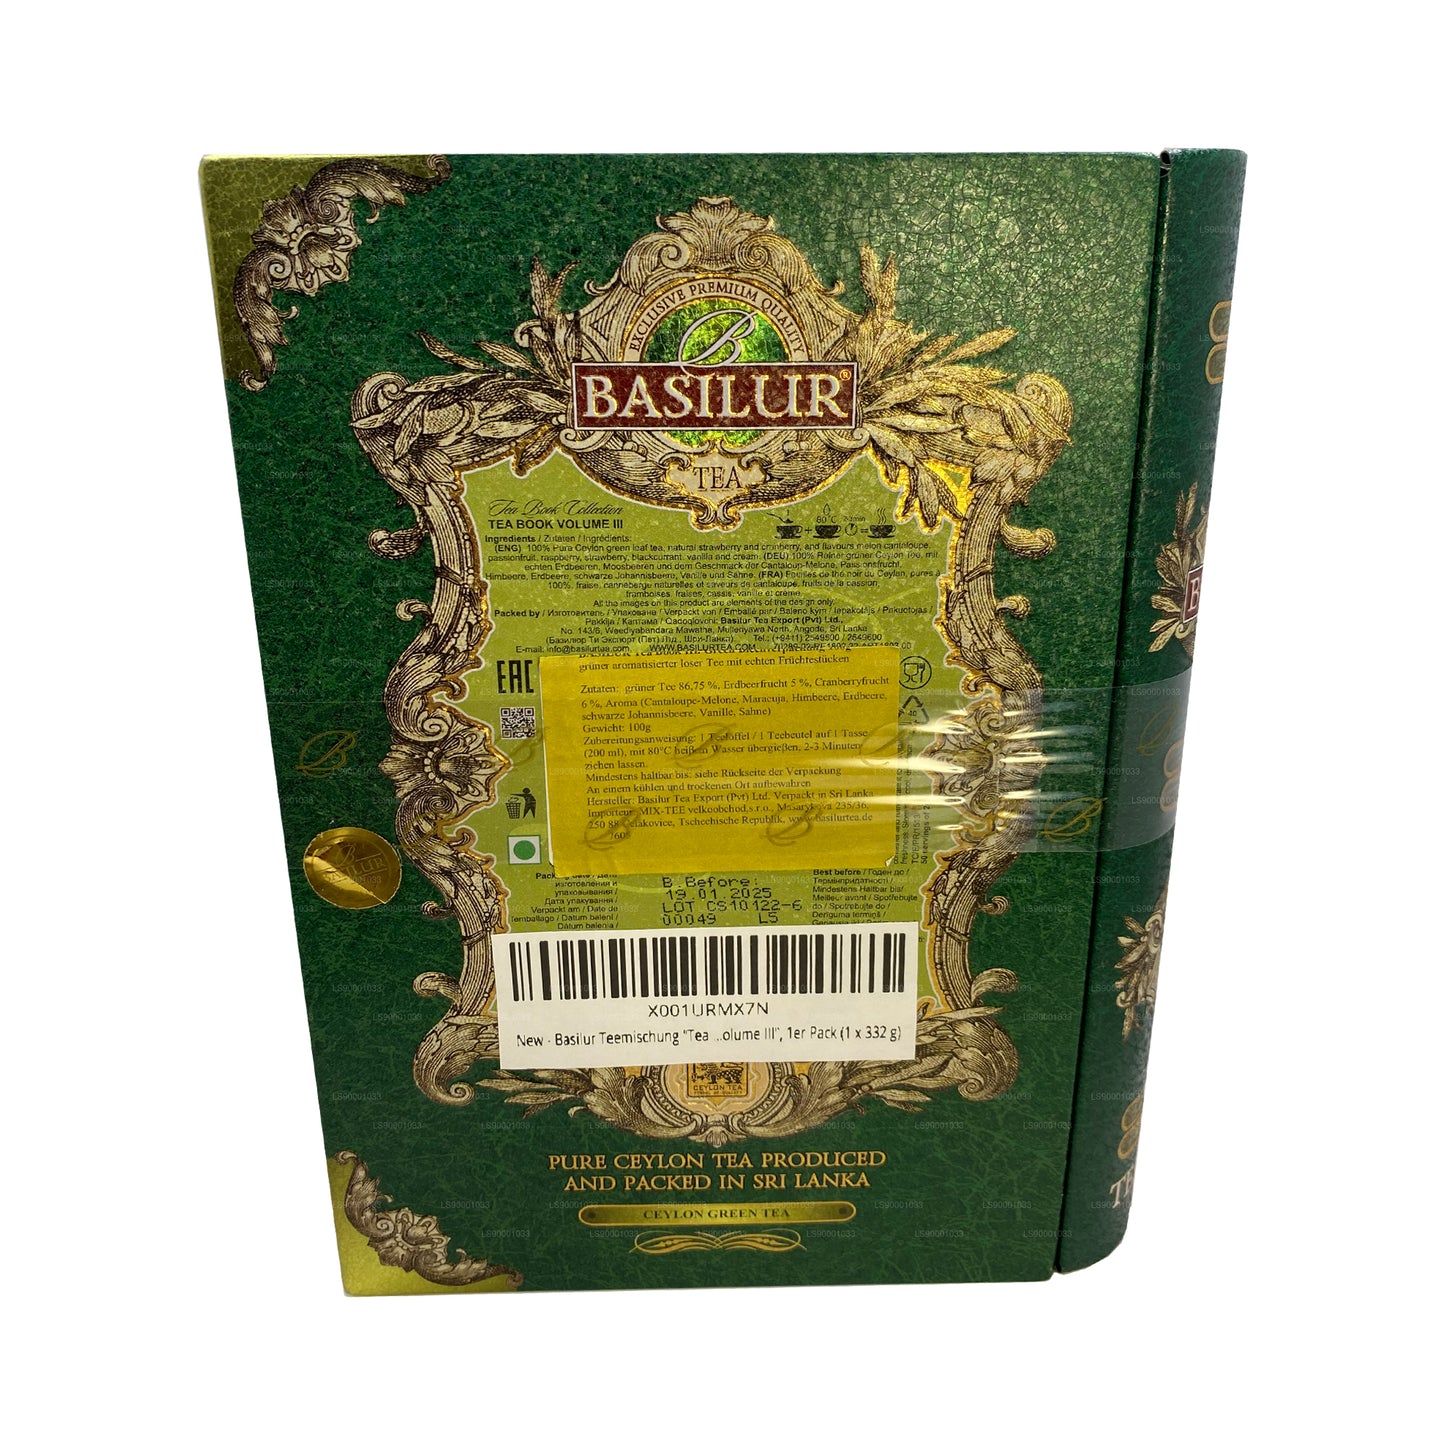 Cuaderno de té Basilur «Tea Book Volume III, verde» (100 g)